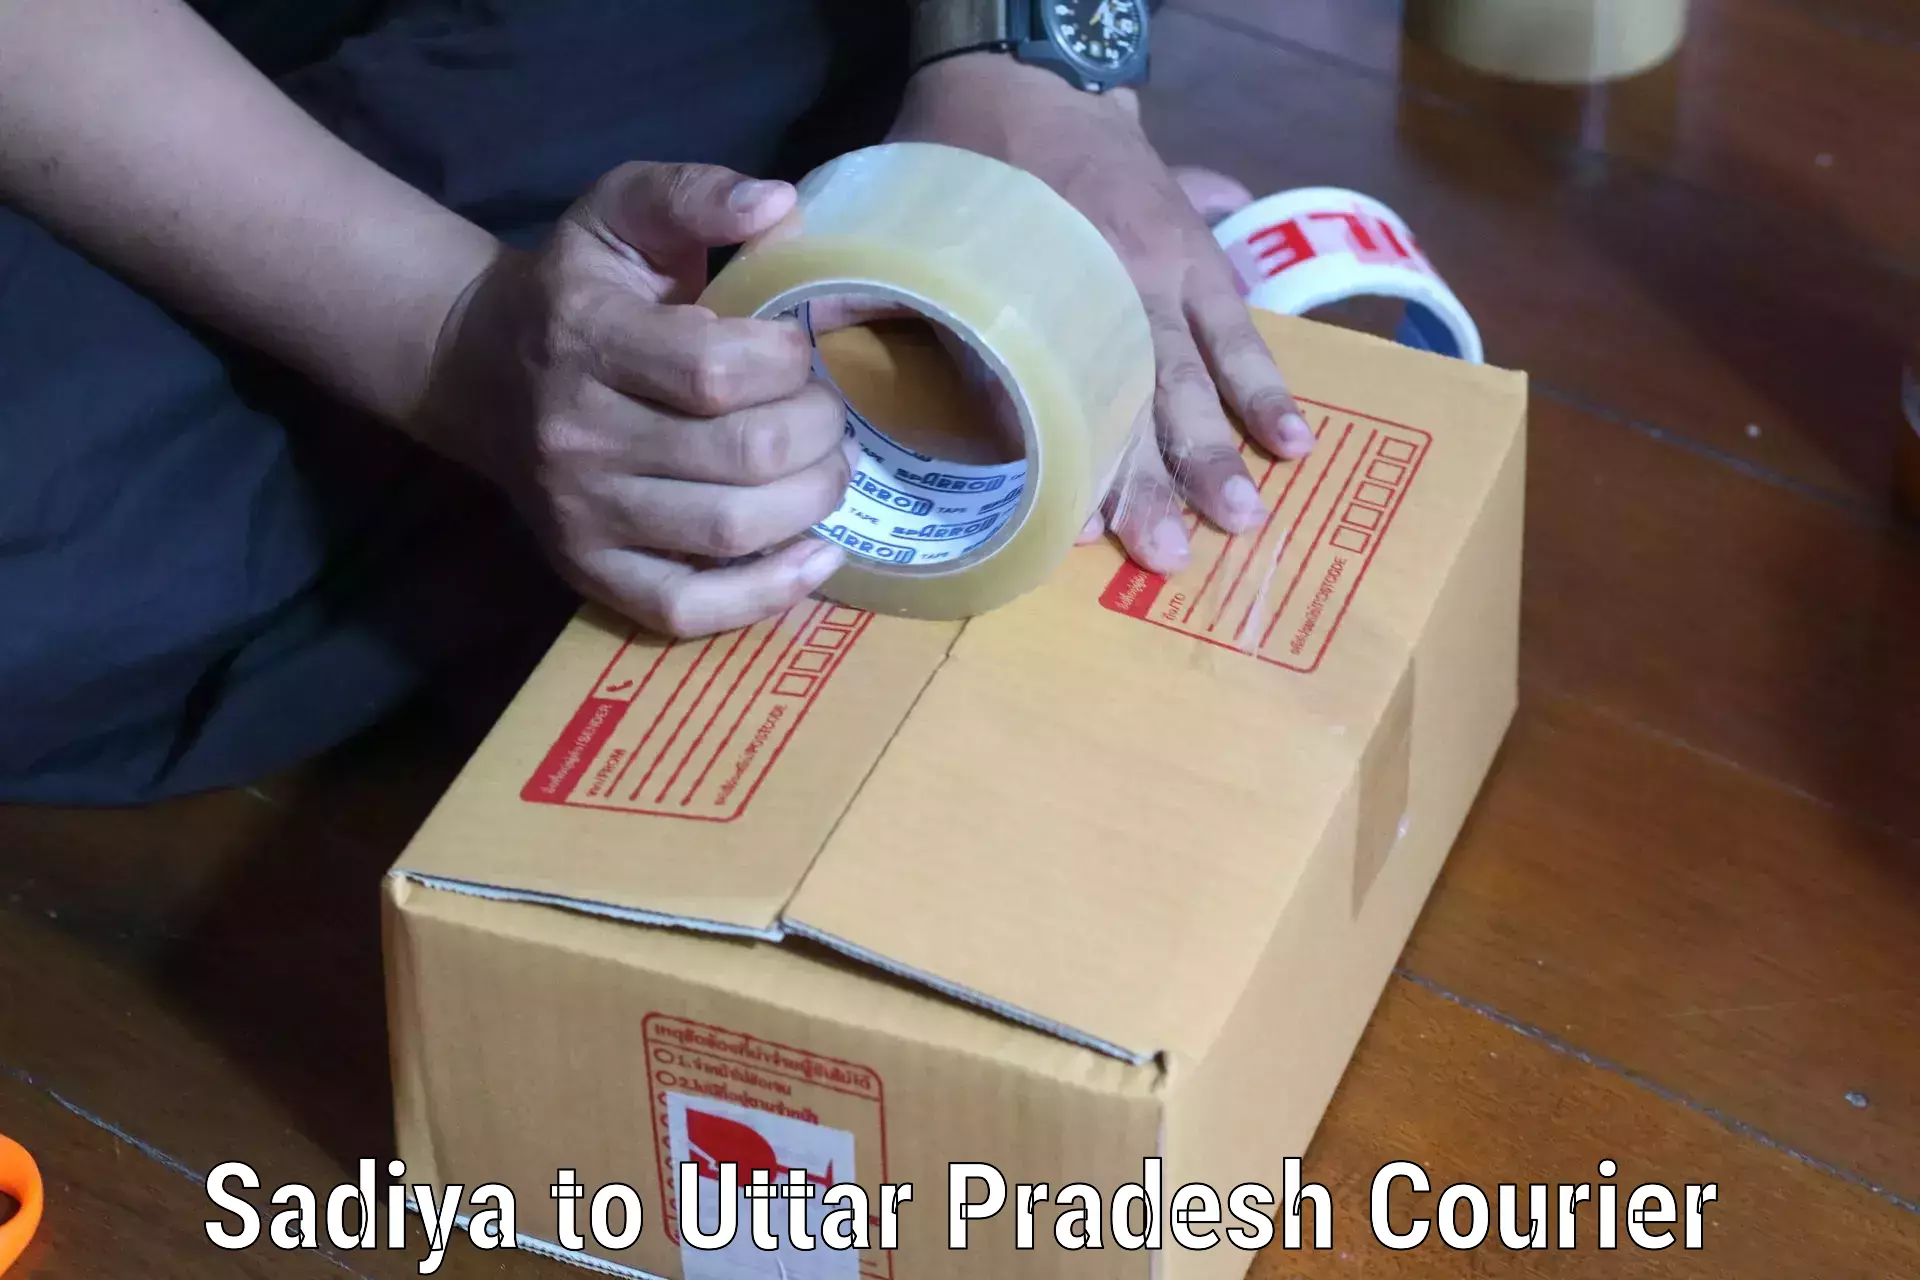 Global parcel delivery Sadiya to Agra